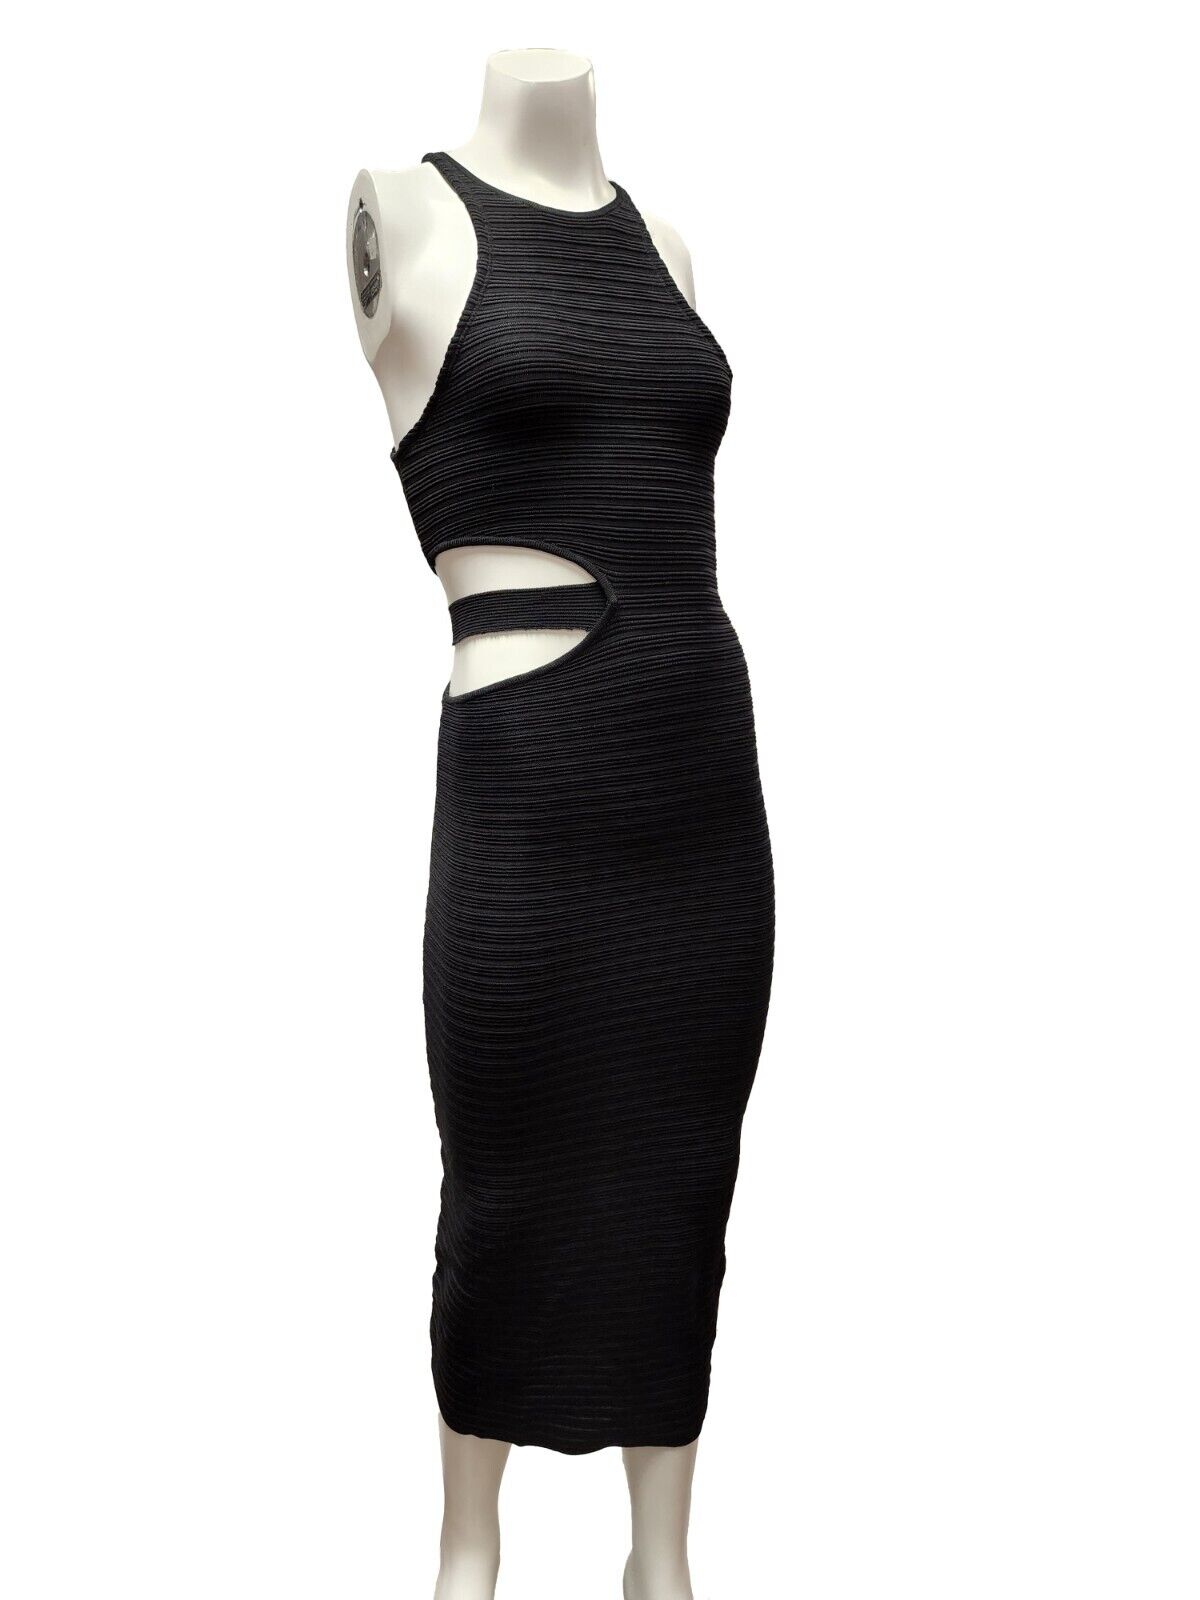 Michael Costello Athena Midi Dress in Black - size XXS